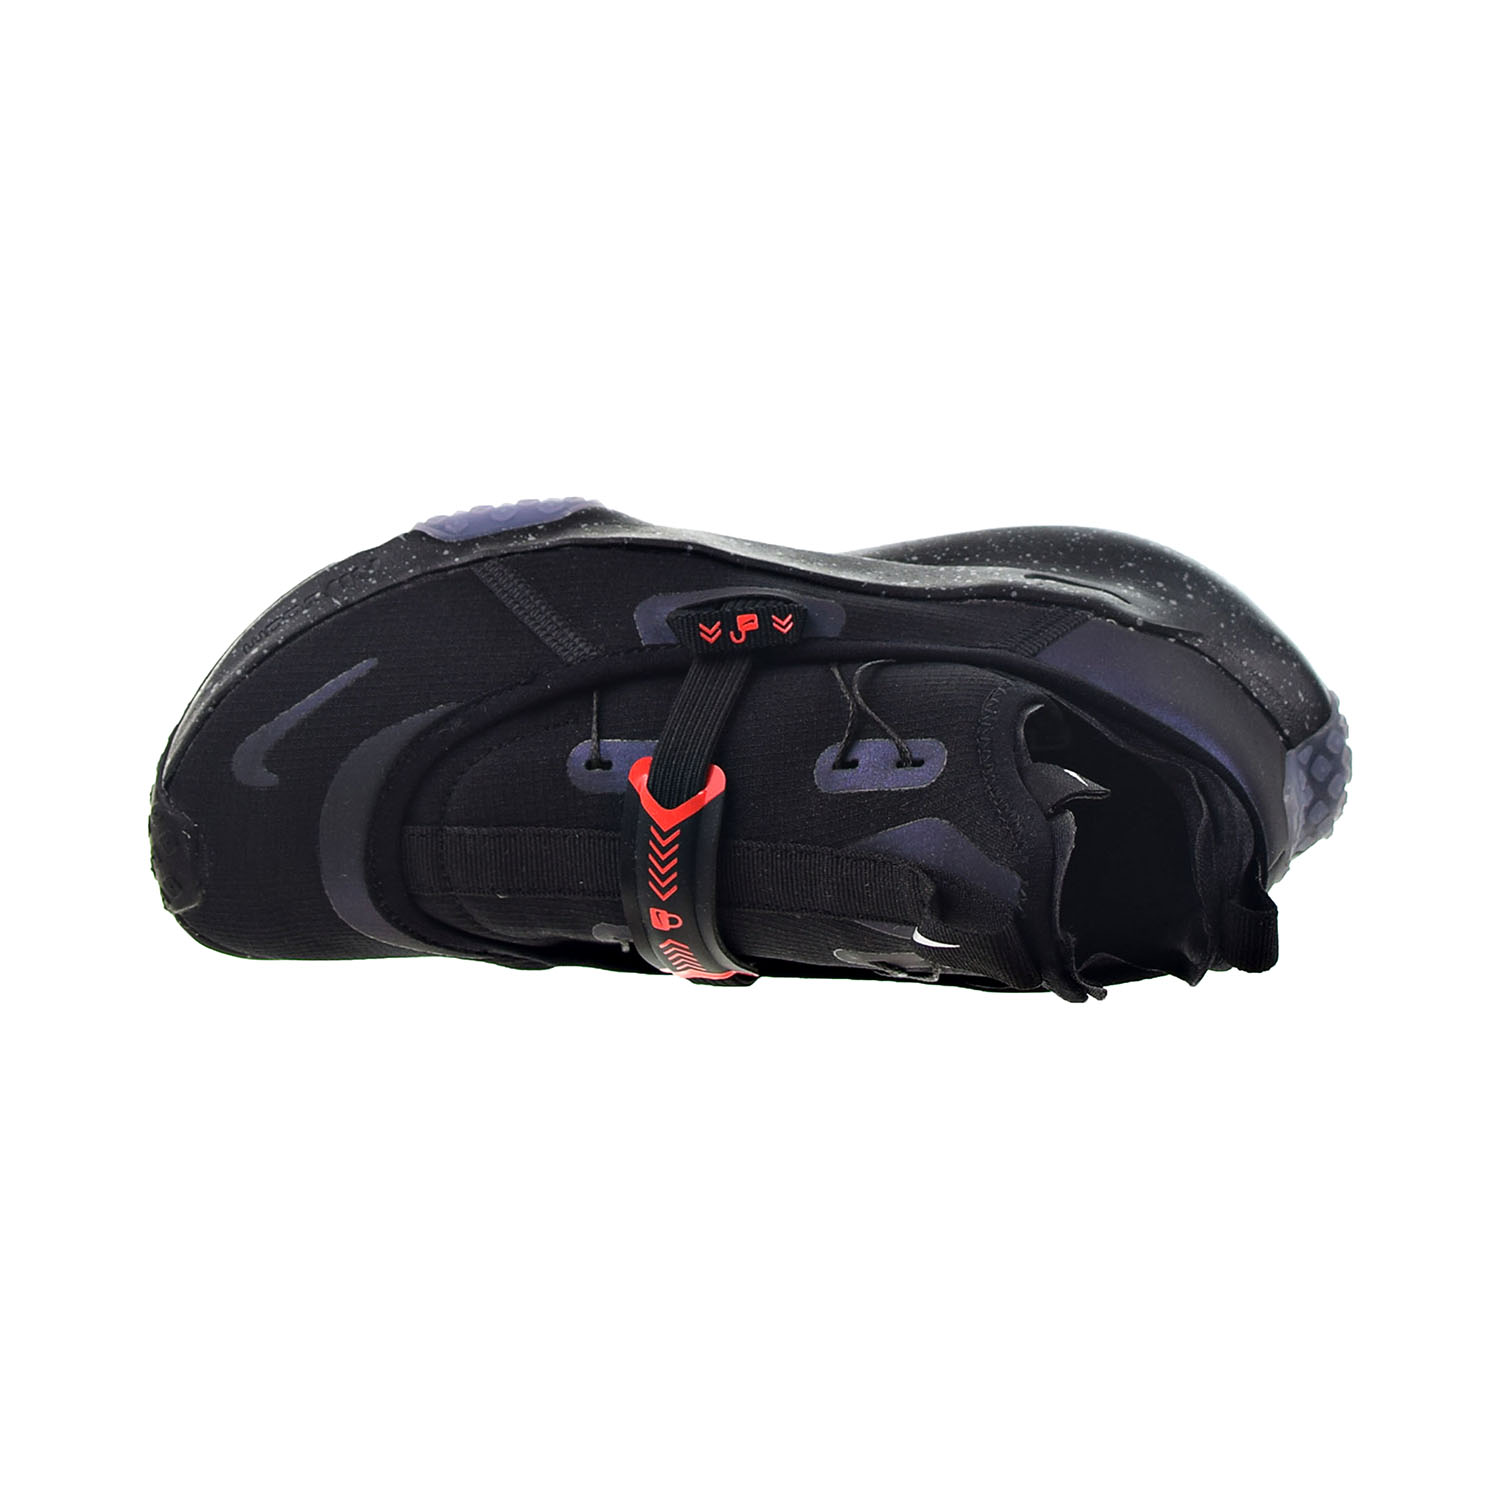 Nike Zoom Traverse Big Kids' Shoes Black-Psychic Purple-Volt-Black cn8199-002